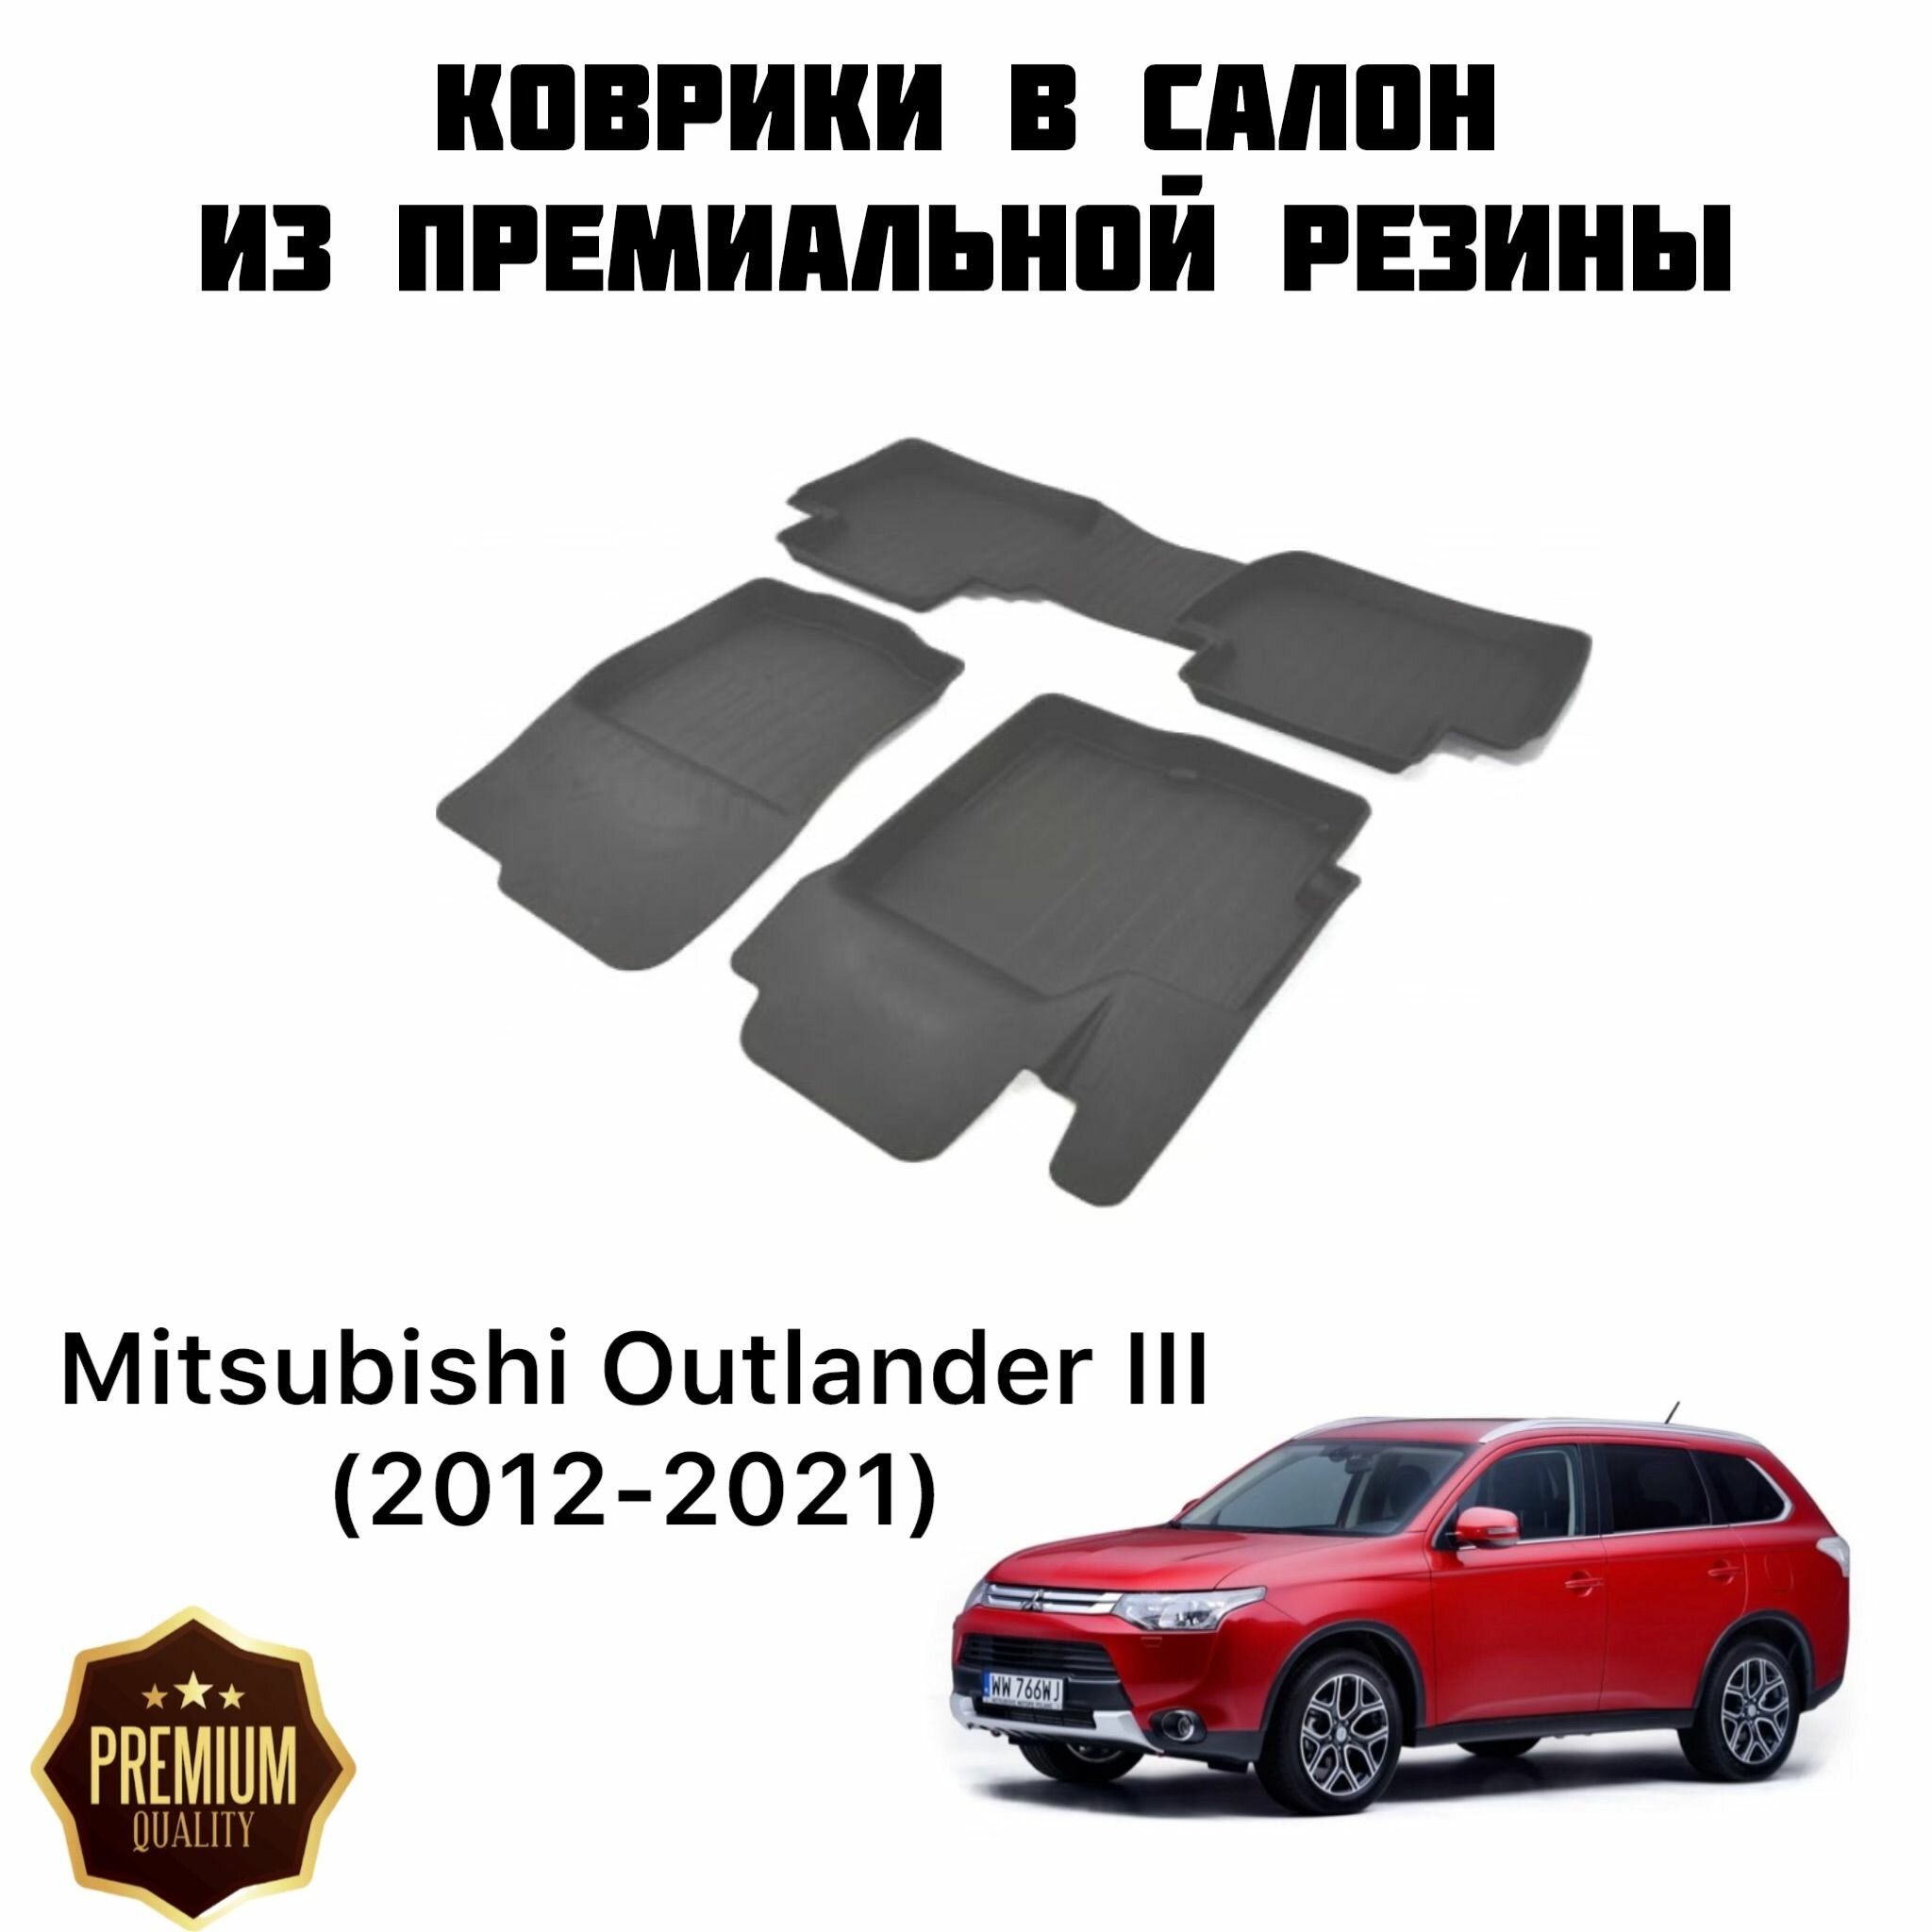 Резиновые коврики Mitsubishi Outlander III (2012-2021) / Коврики Митсубиши Аутлендер